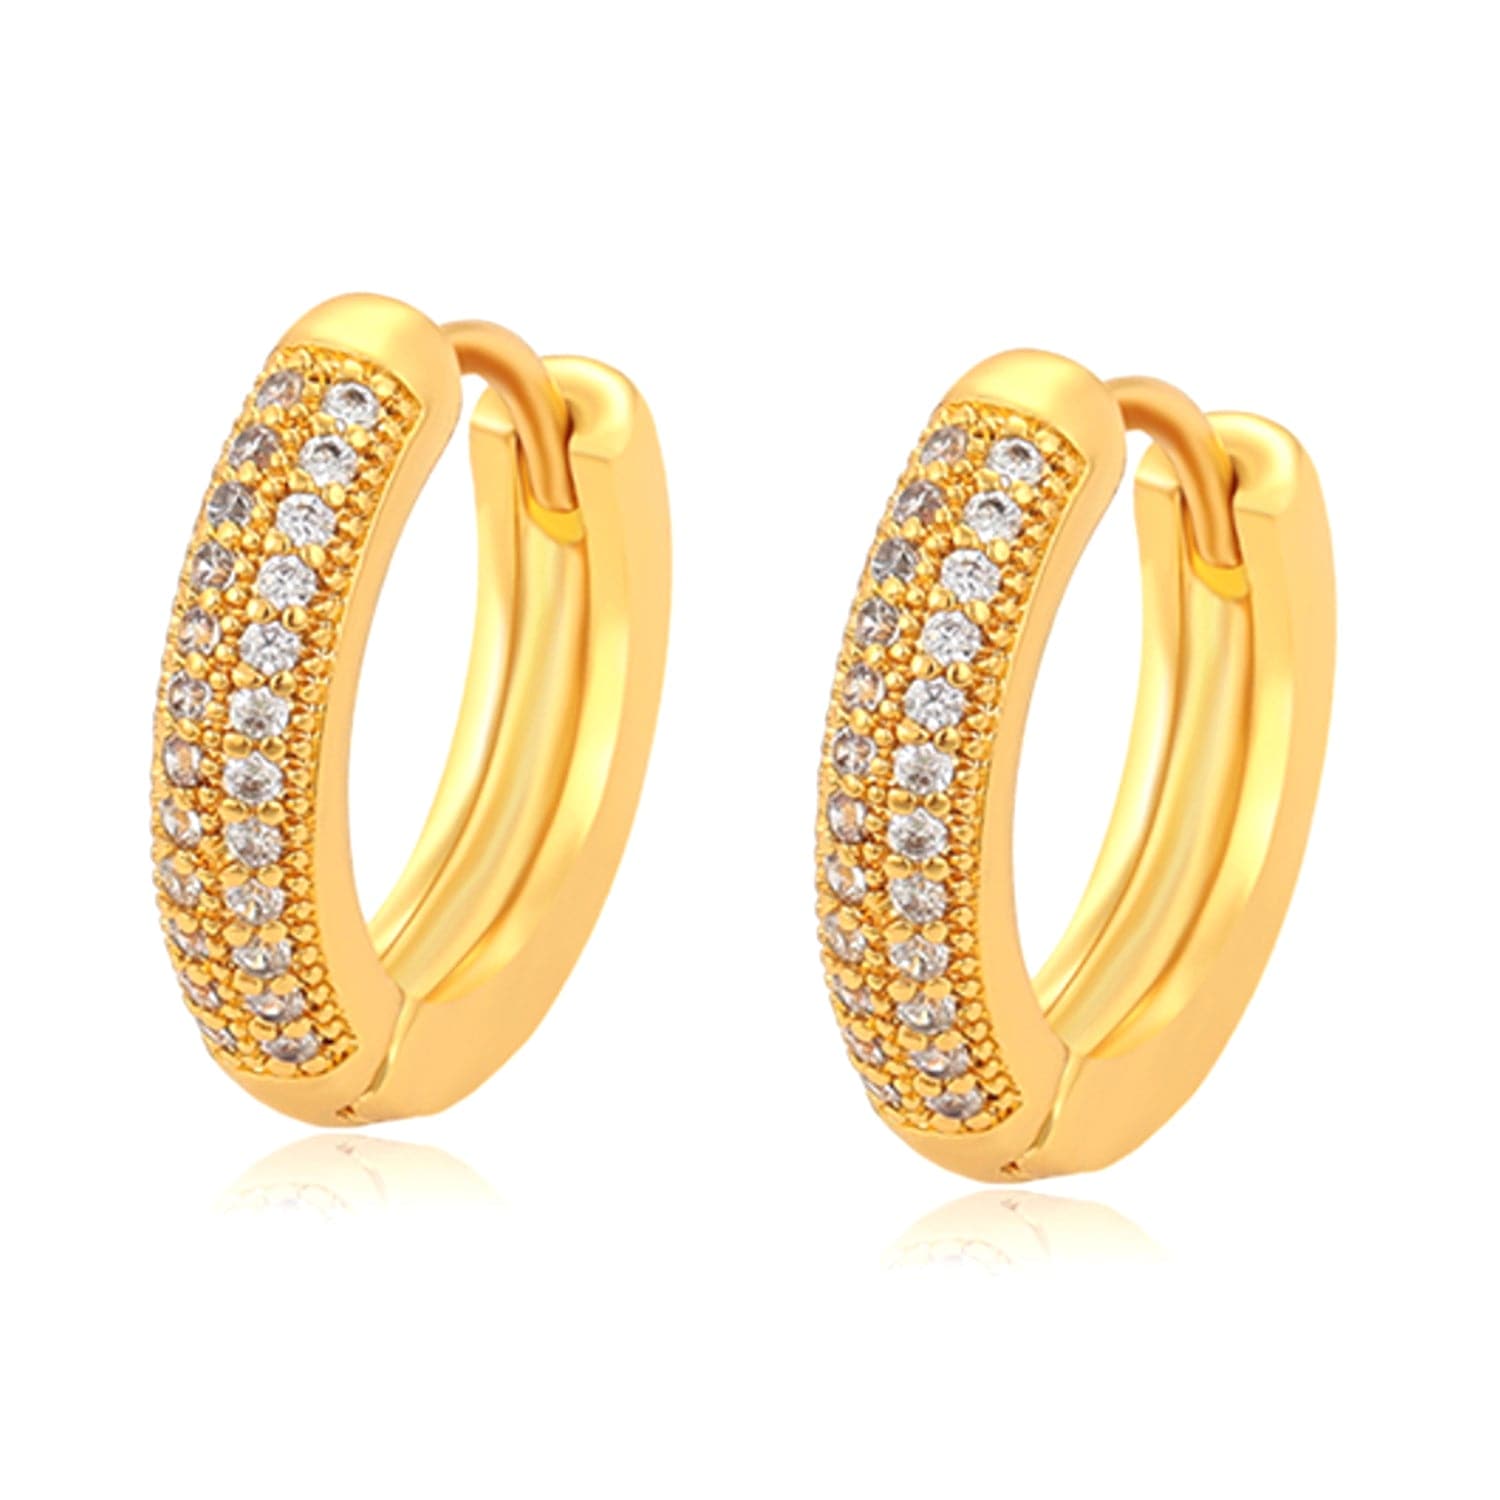 bianco rosso Earrings X000704074 cyprus greece jewelry gift free shipping europe worldwide